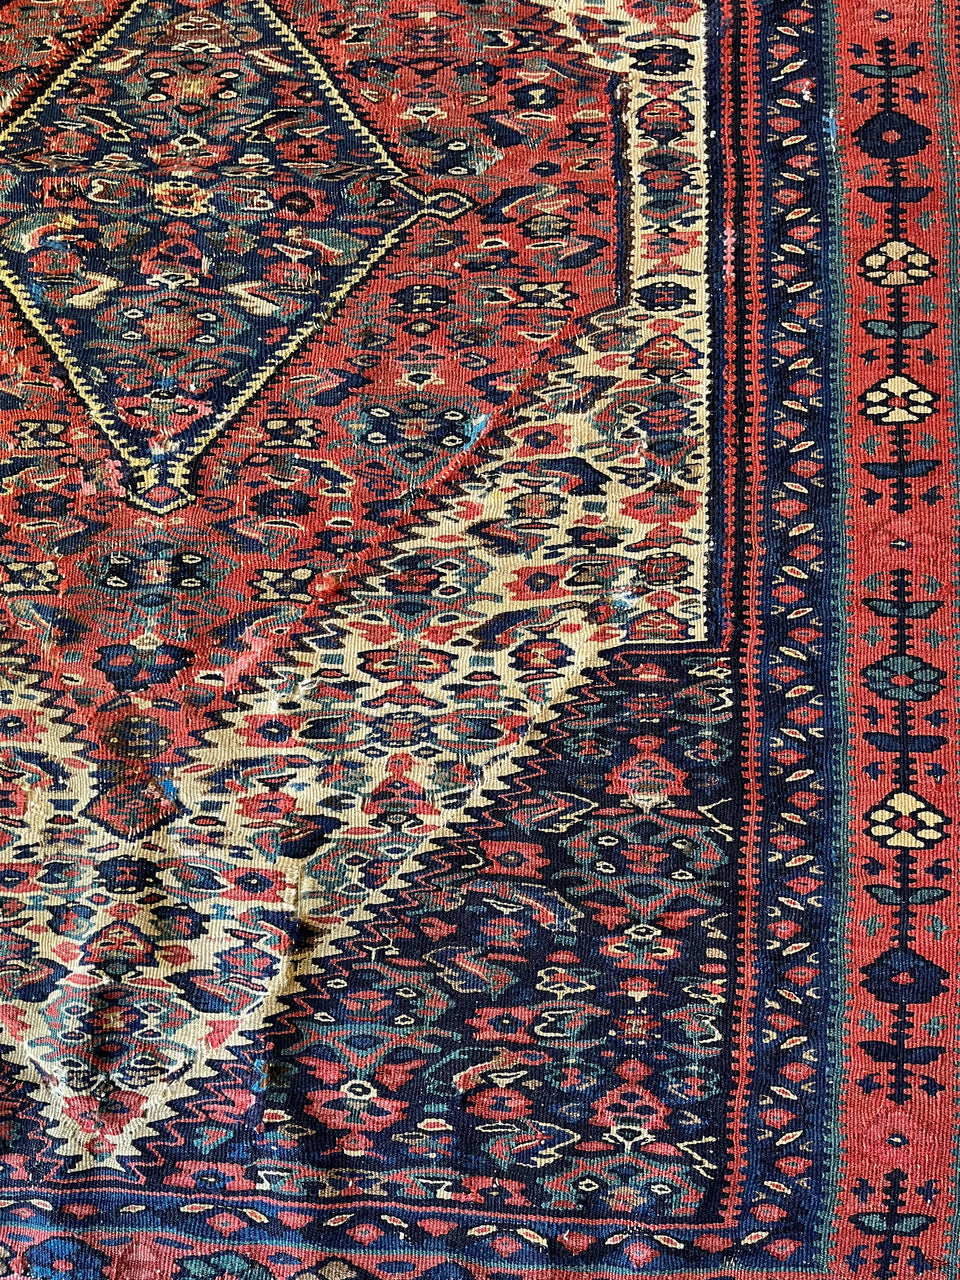 Old Kilim Rug Persian Carpet/オールドキリム ペルシャ絨毯 ラグ カーペット